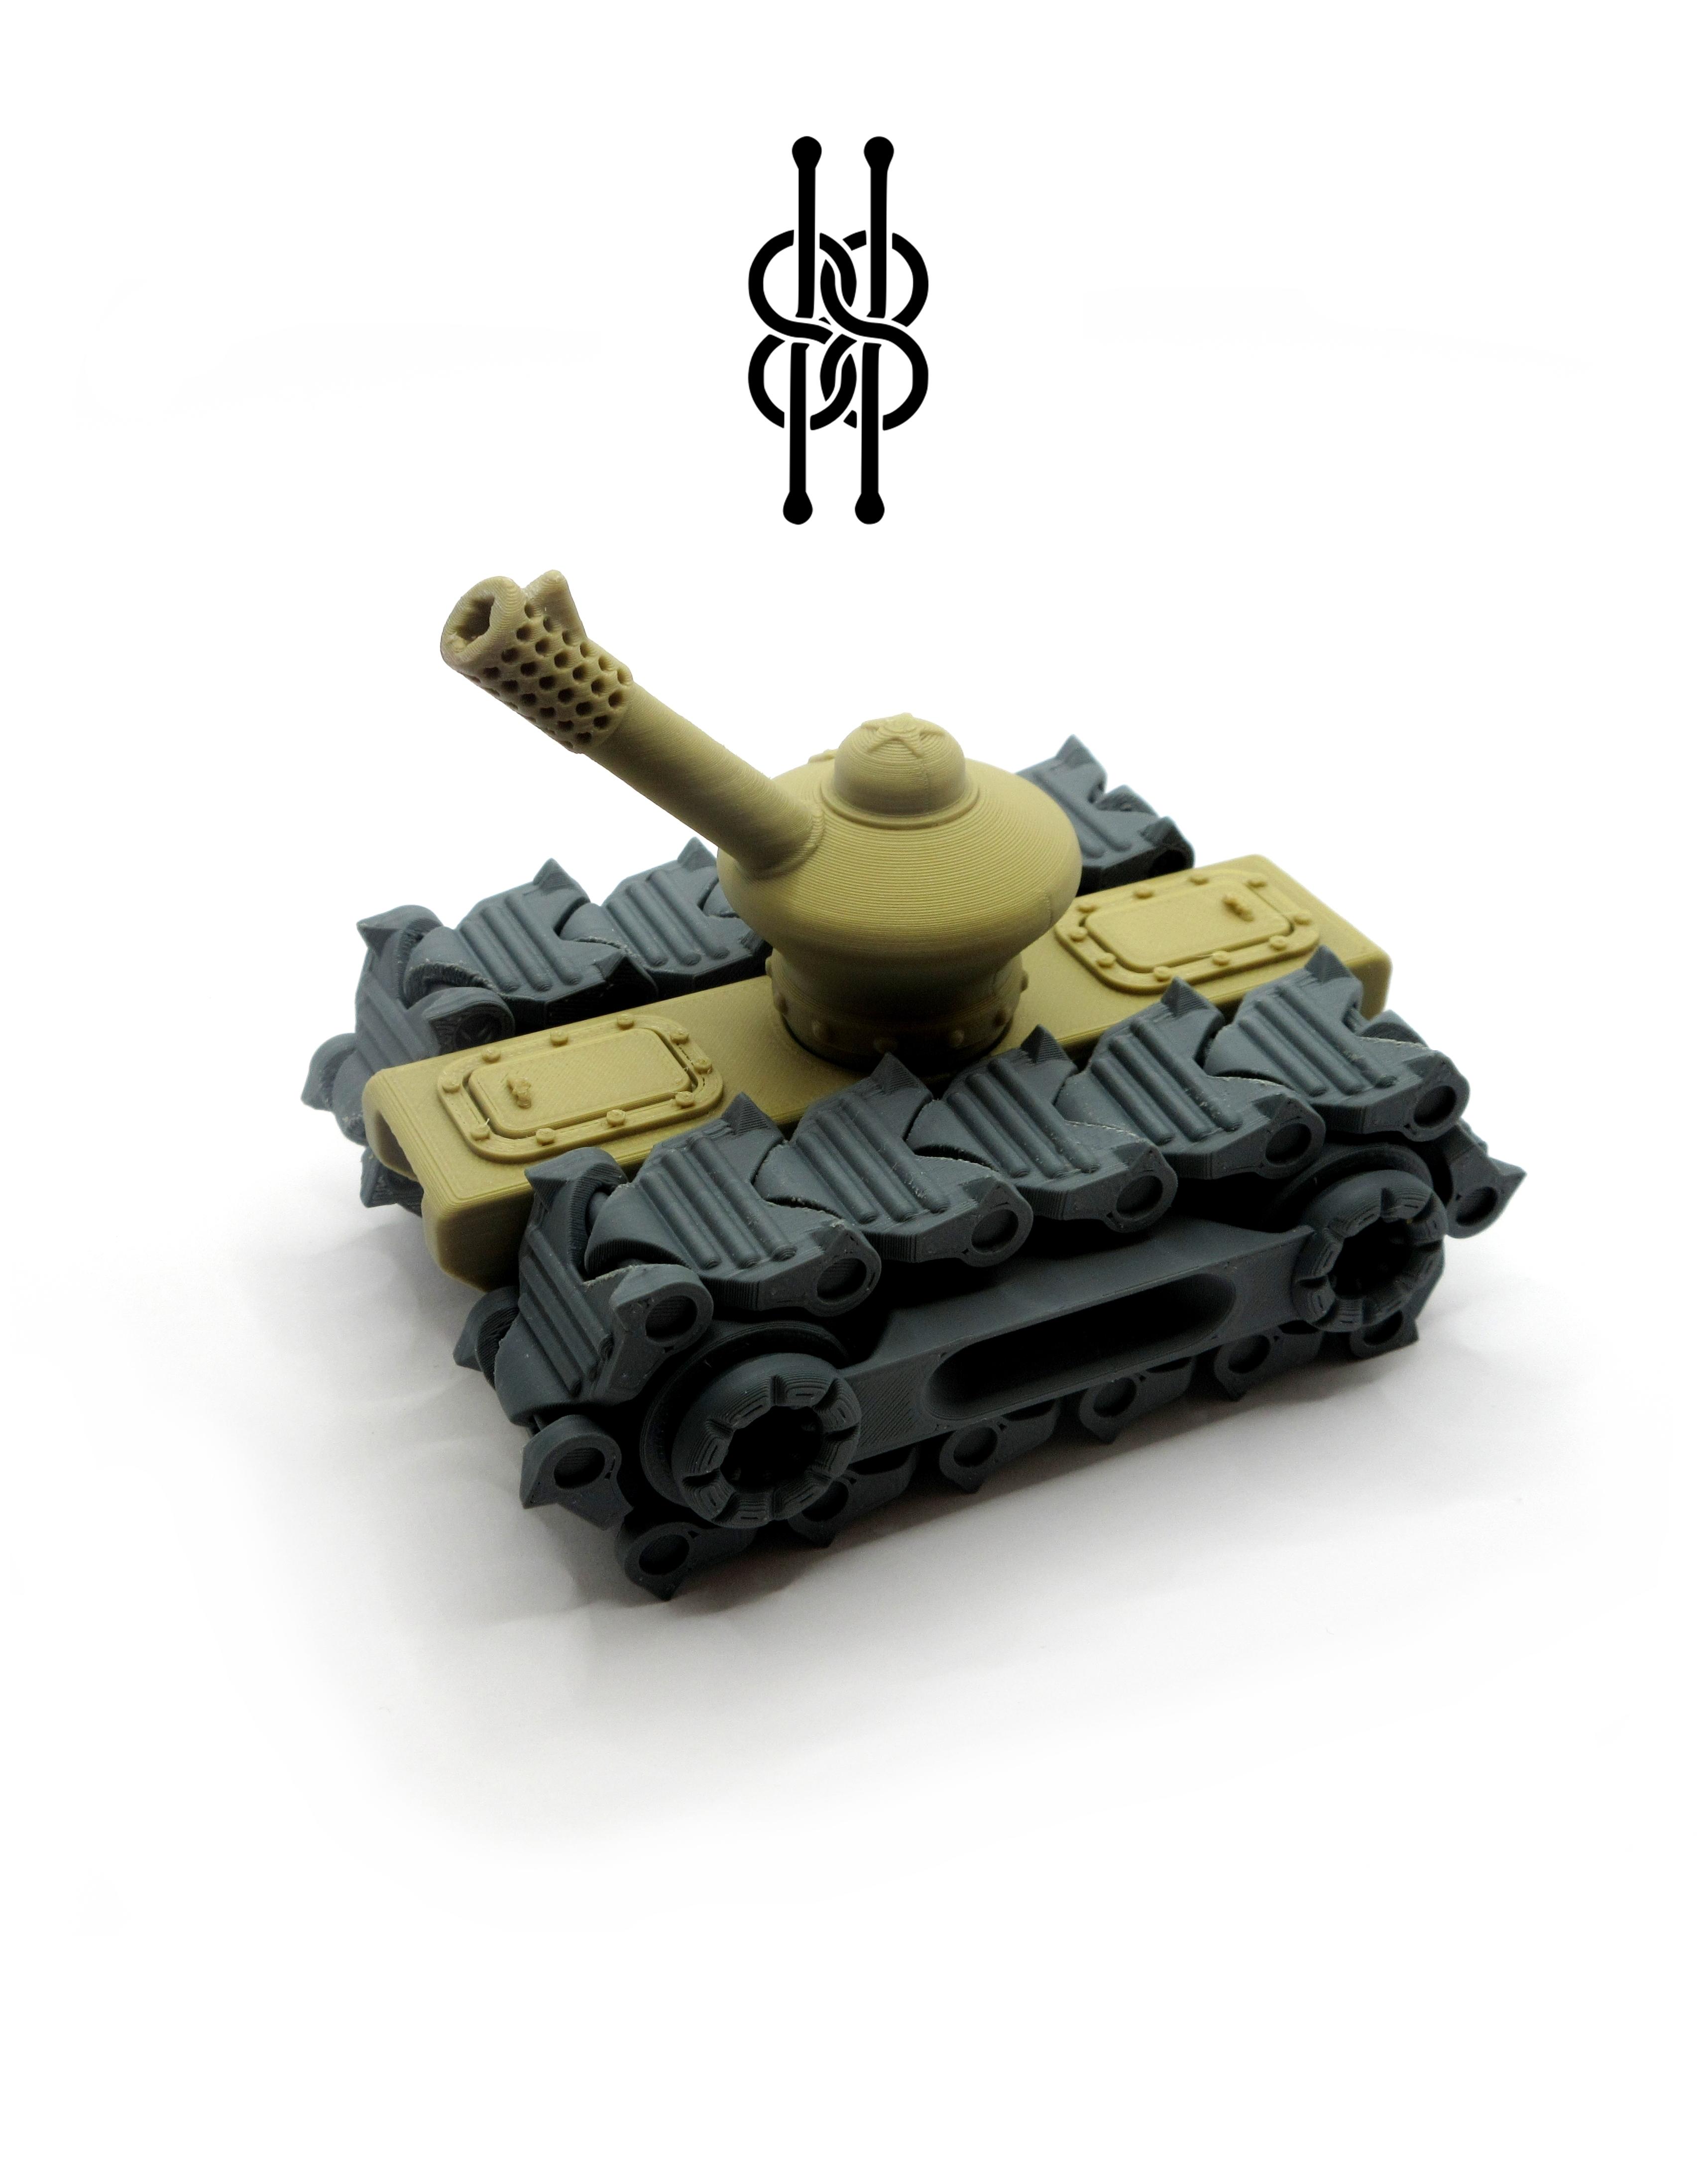 Tank - New 3D Model Released